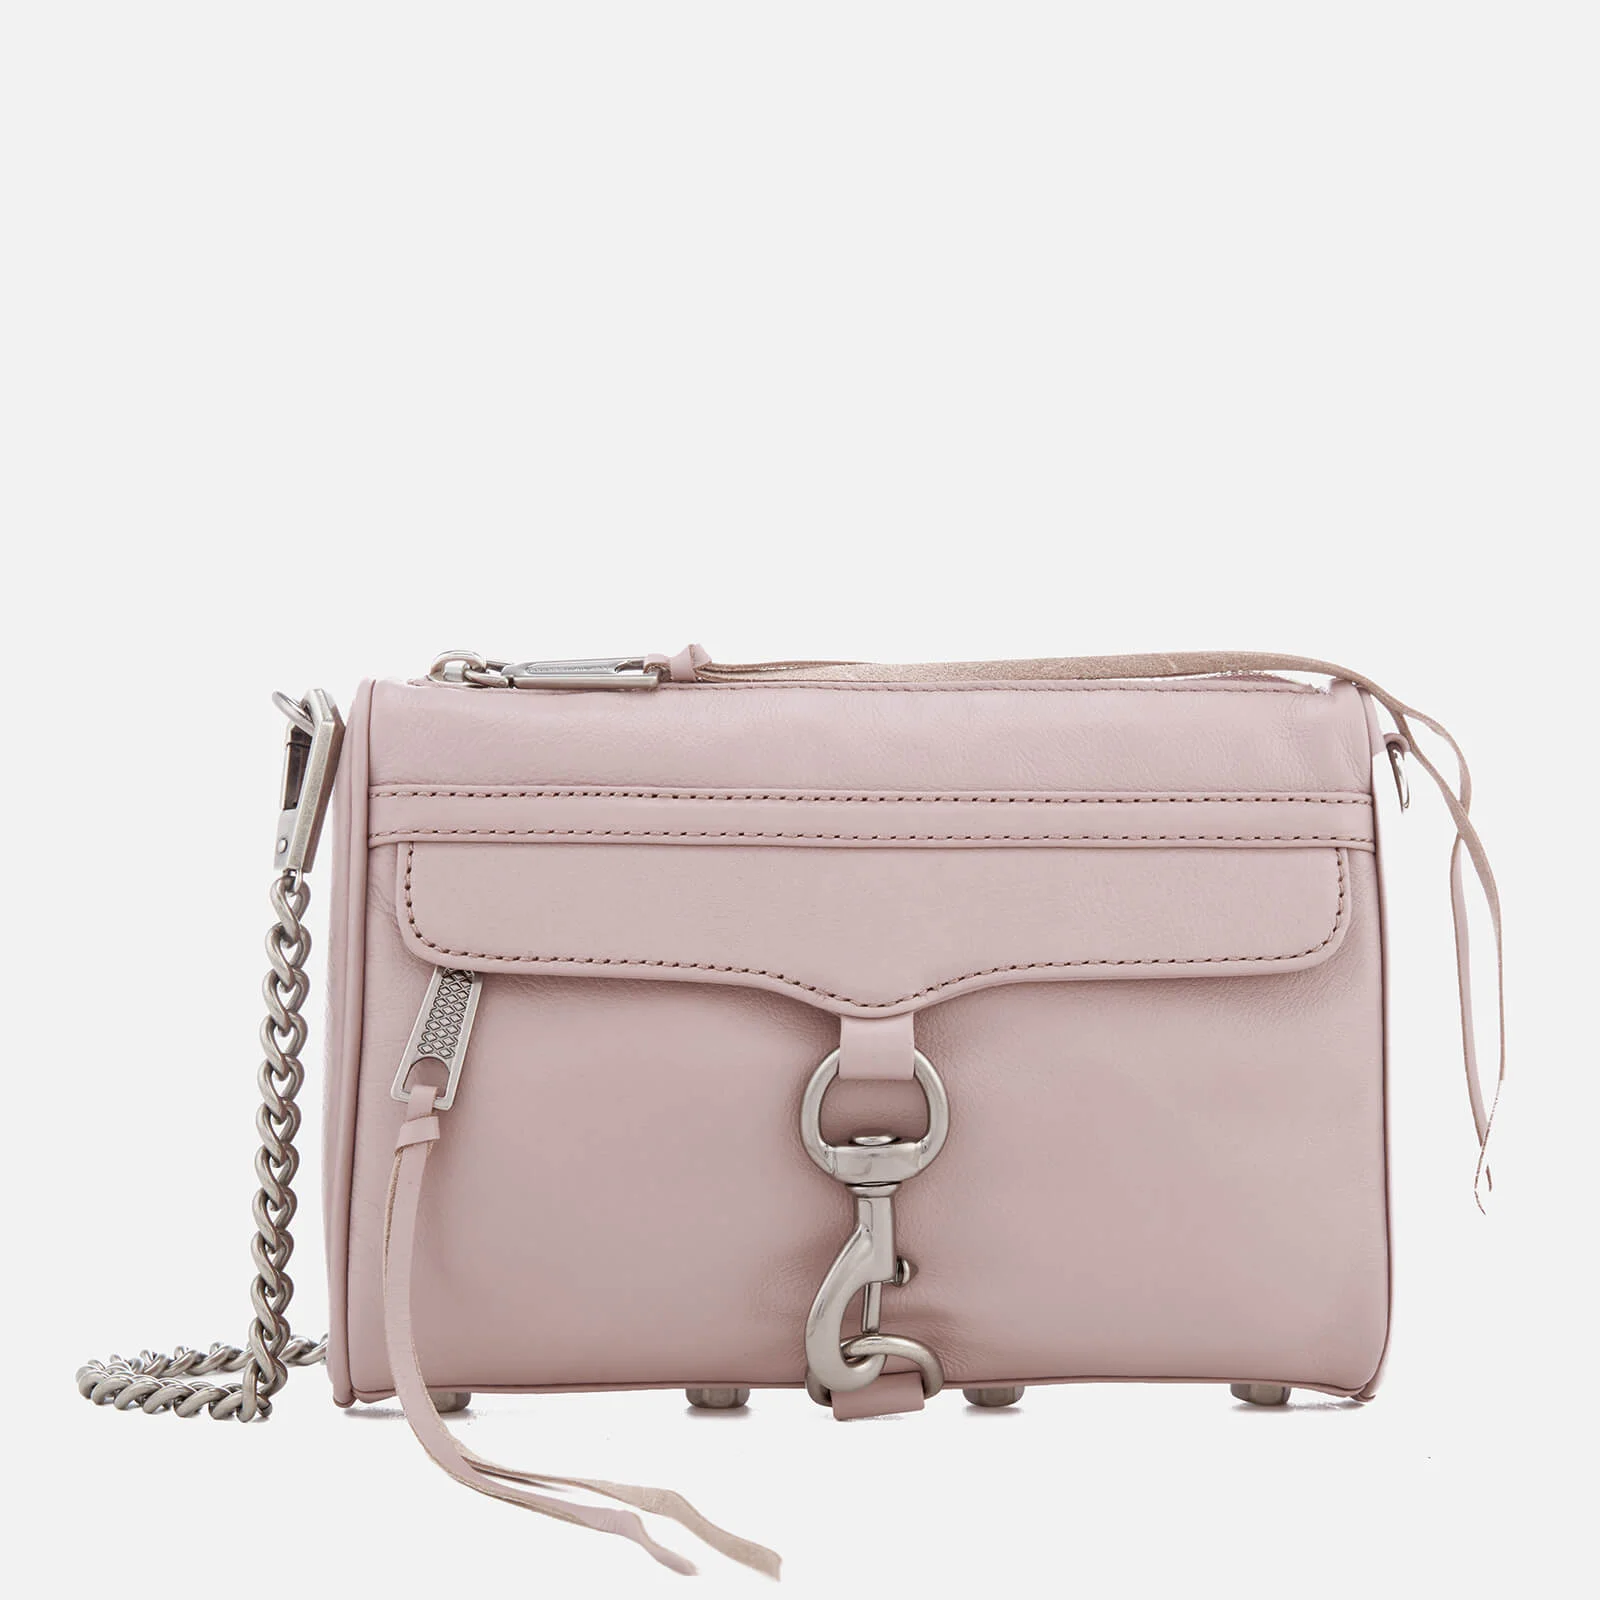 Rebecca Minkoff Women's Mini Mac Cross Body Bag - Vintage Pink Image 1